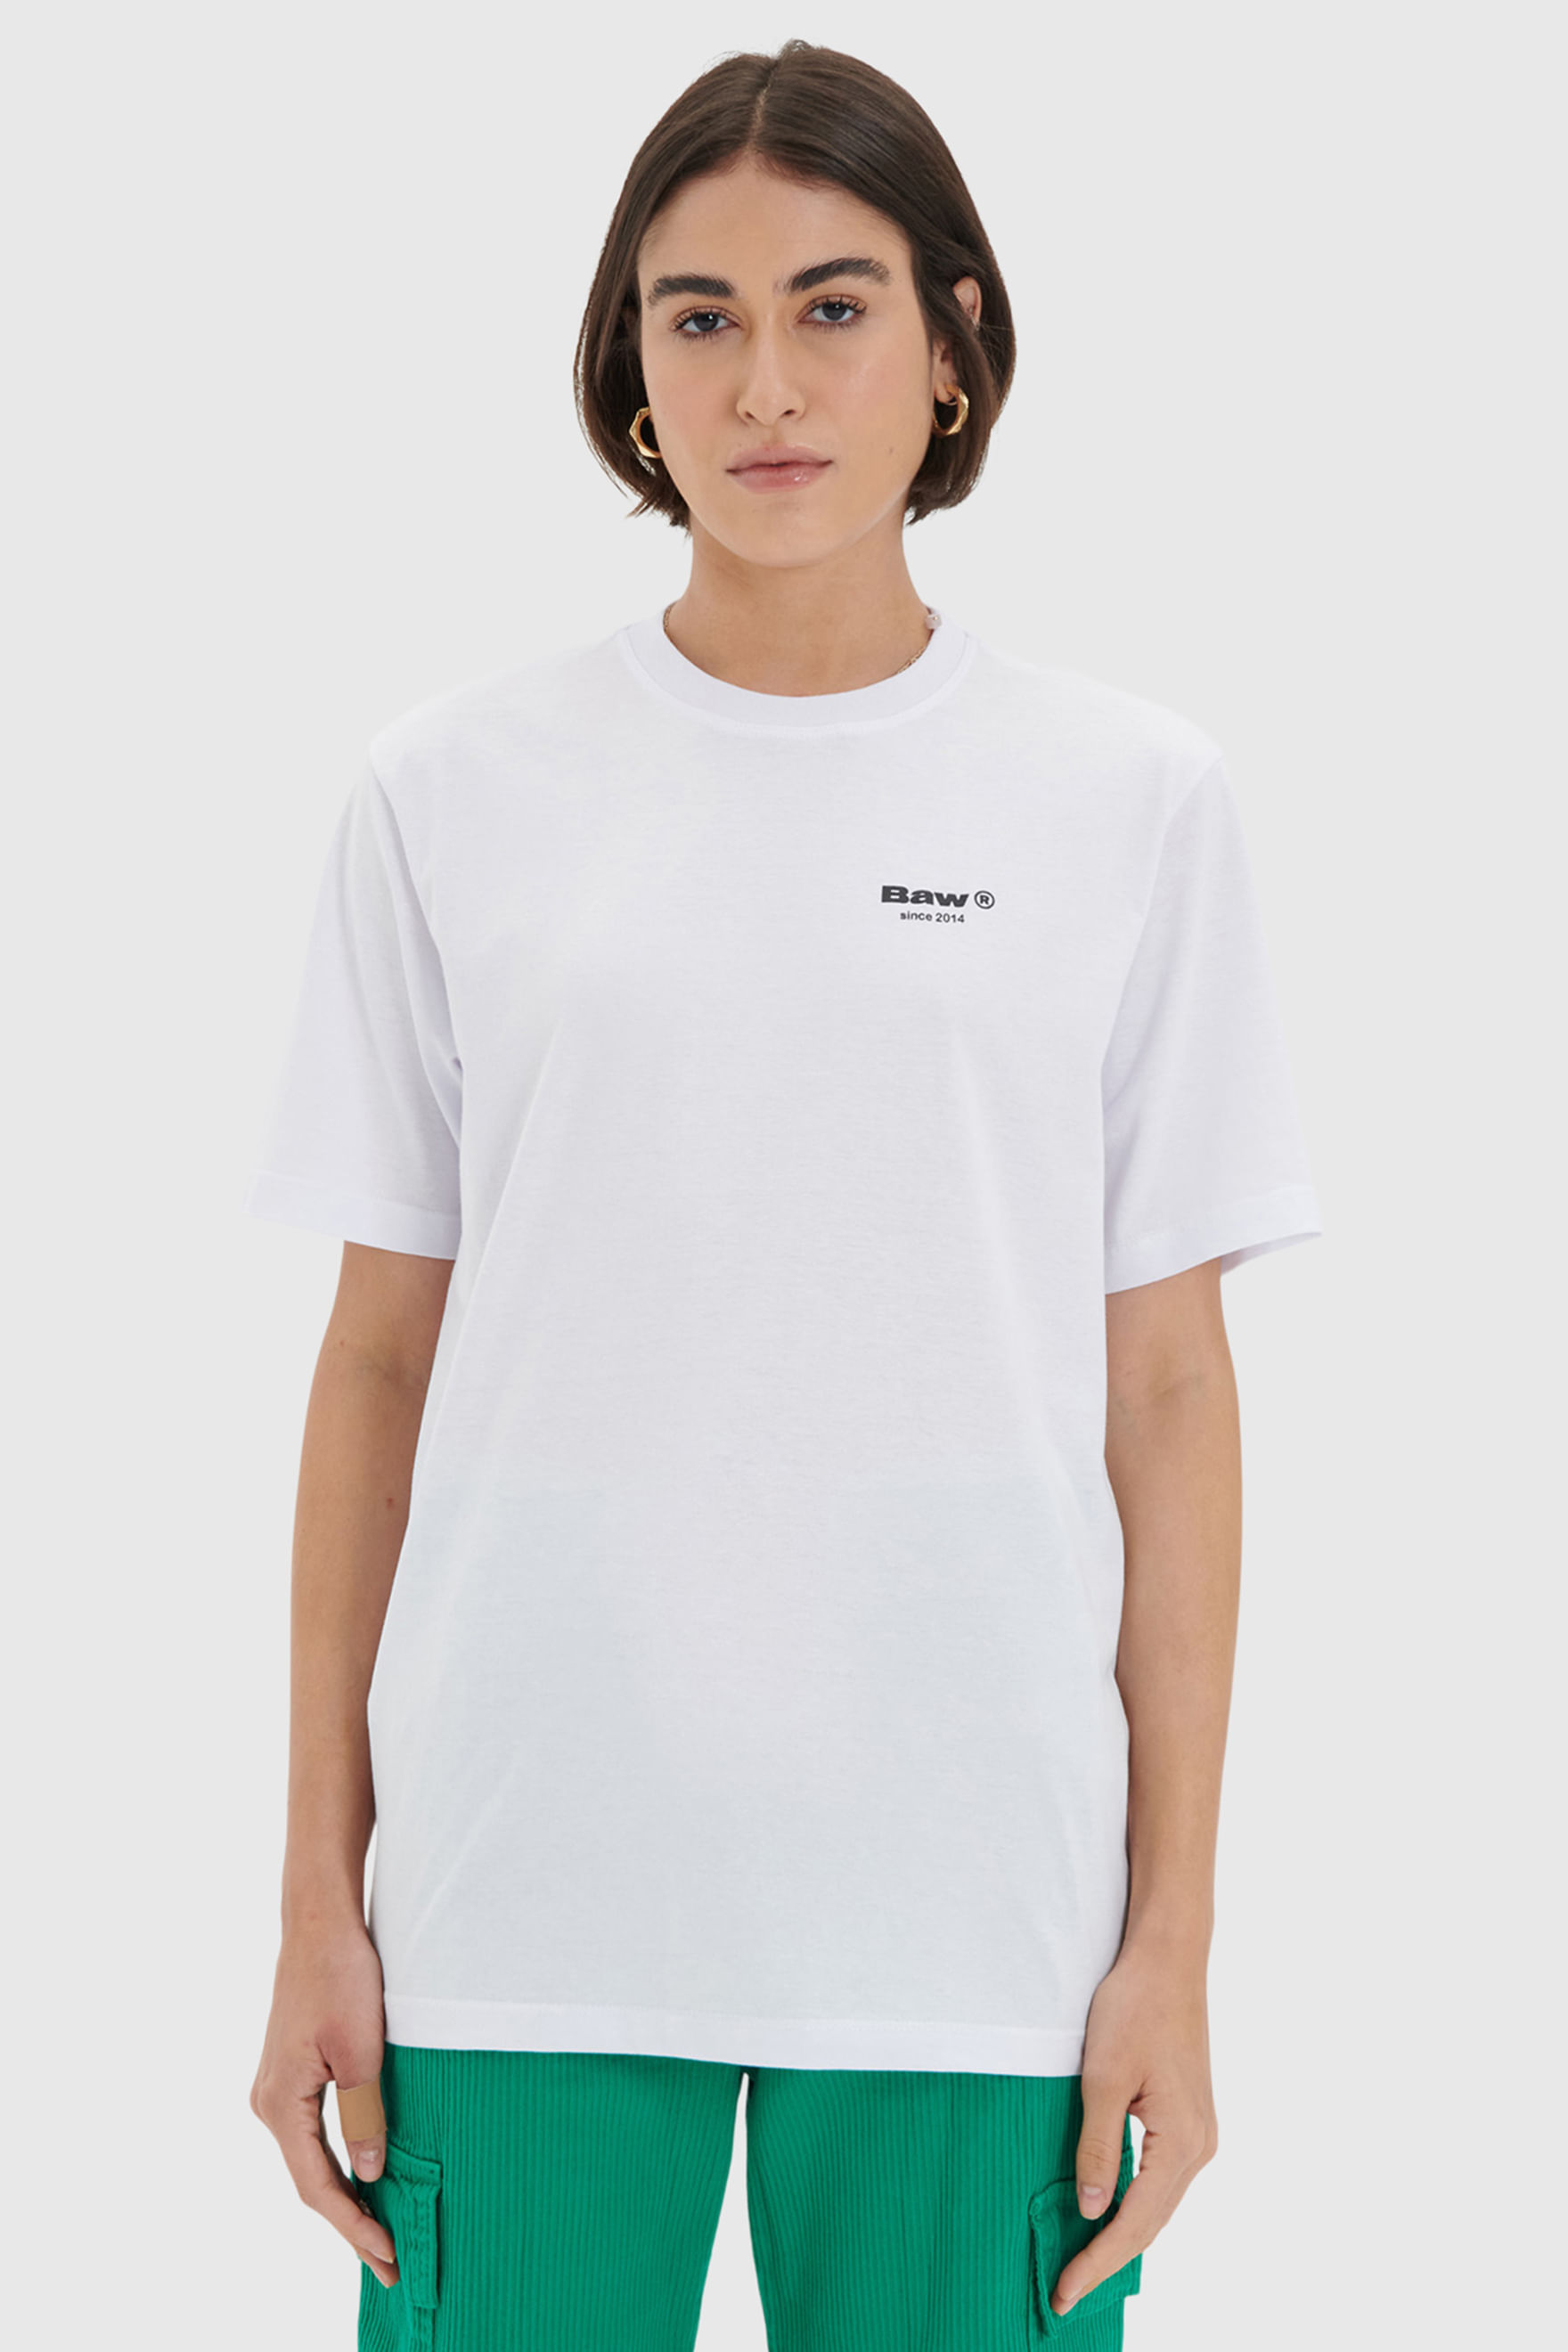 Camiseta Baw Clothing Regular Peach Feminina - Off White